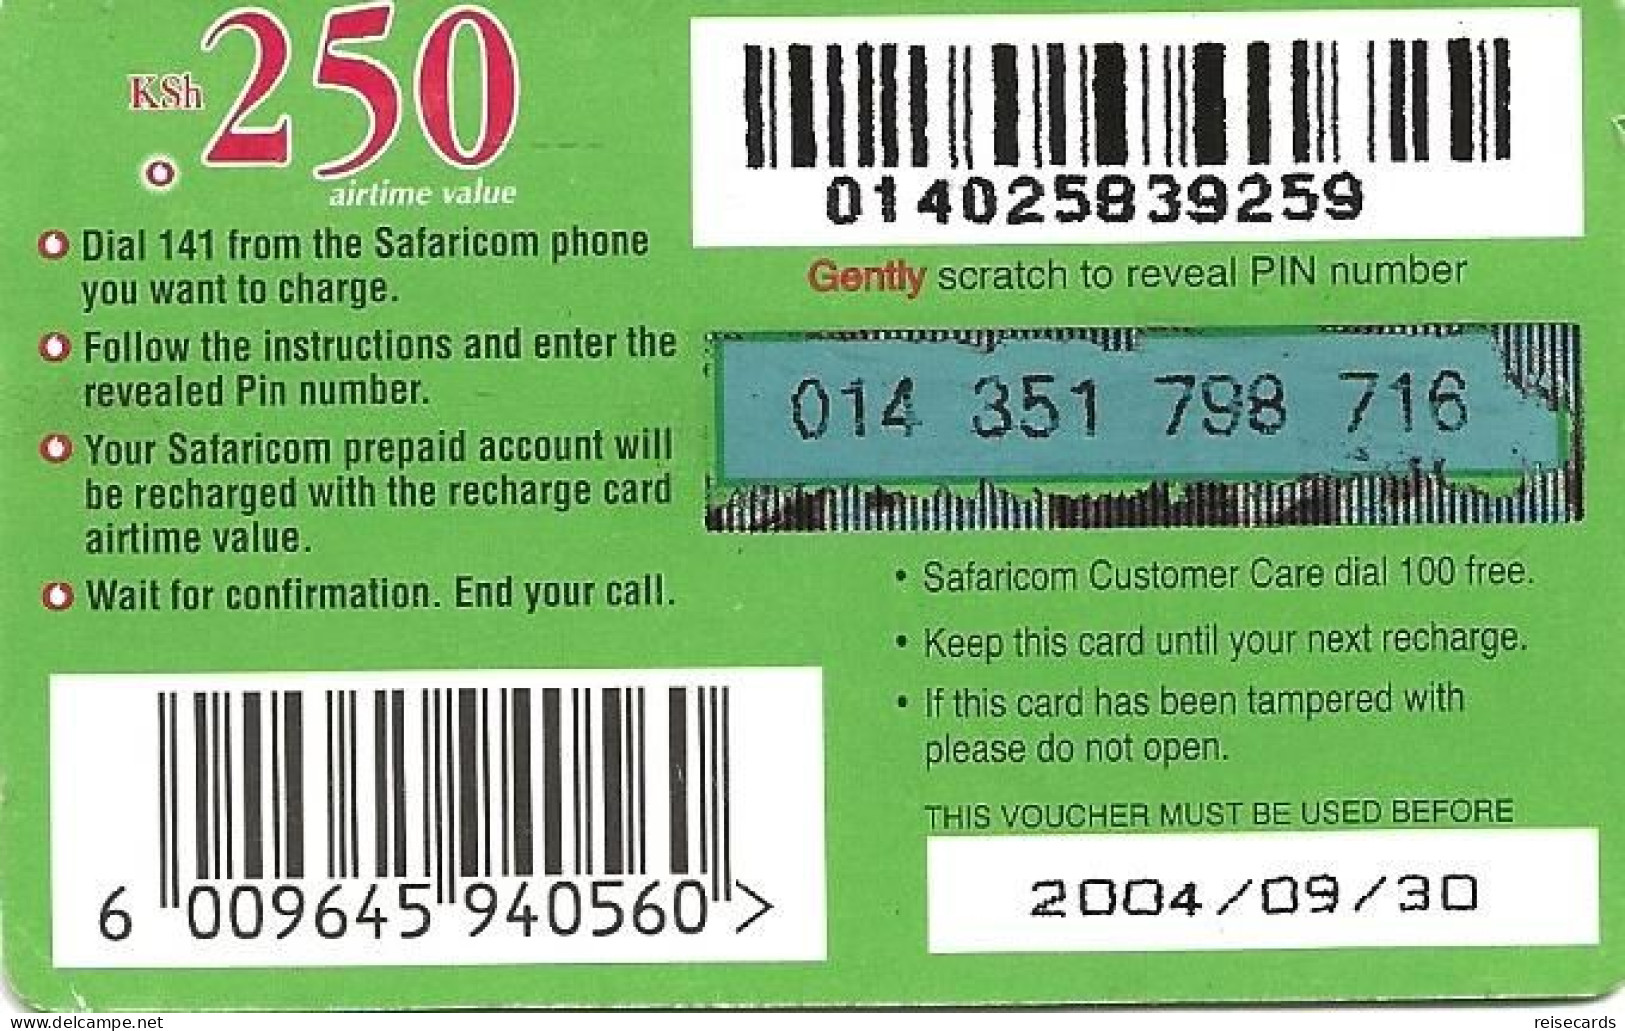 Kenya: Prepaid Mobile Safaricom - The Green Card - Kenya